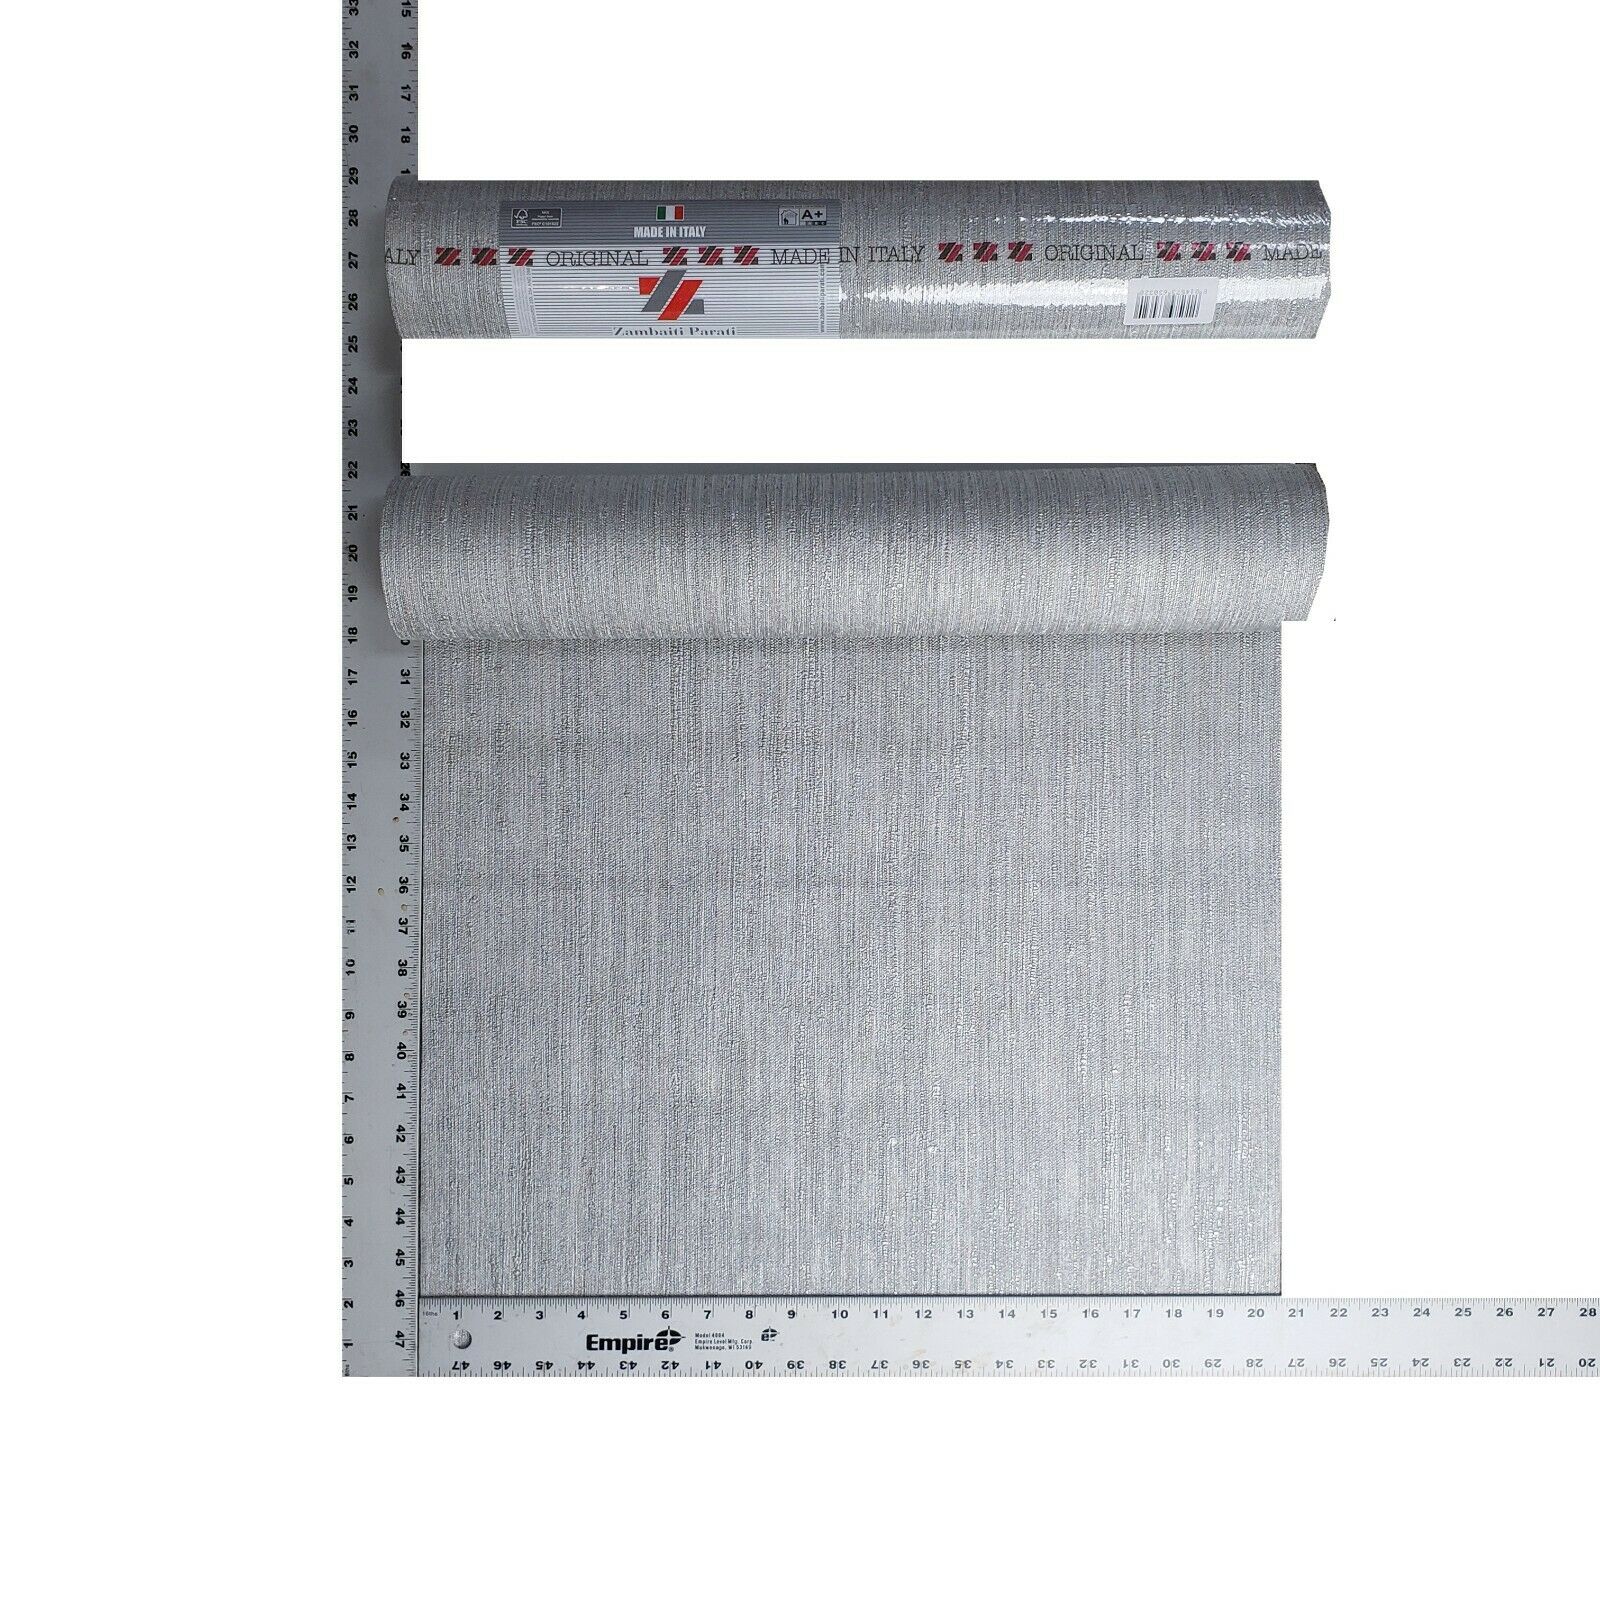 Z63032 Zambaiti Gray silver metallic faux fabric textured stria